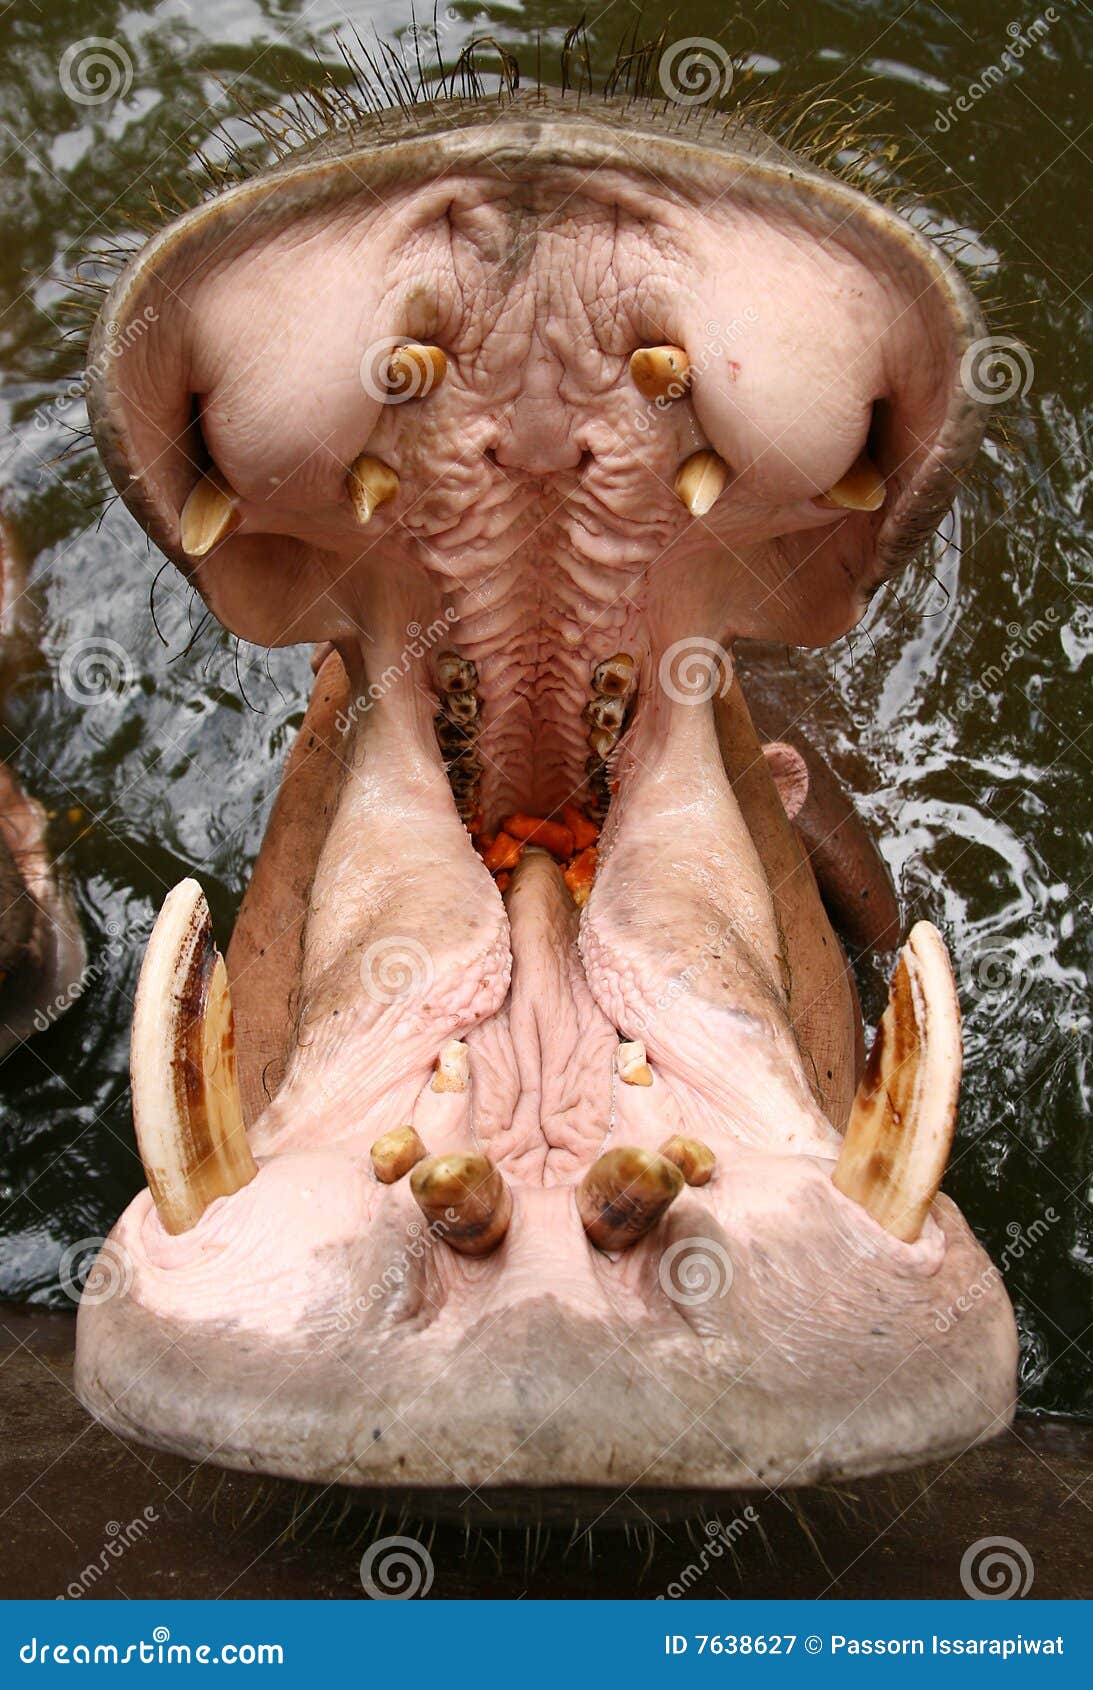 hippopotamus-mouth-open-7638627.jpg